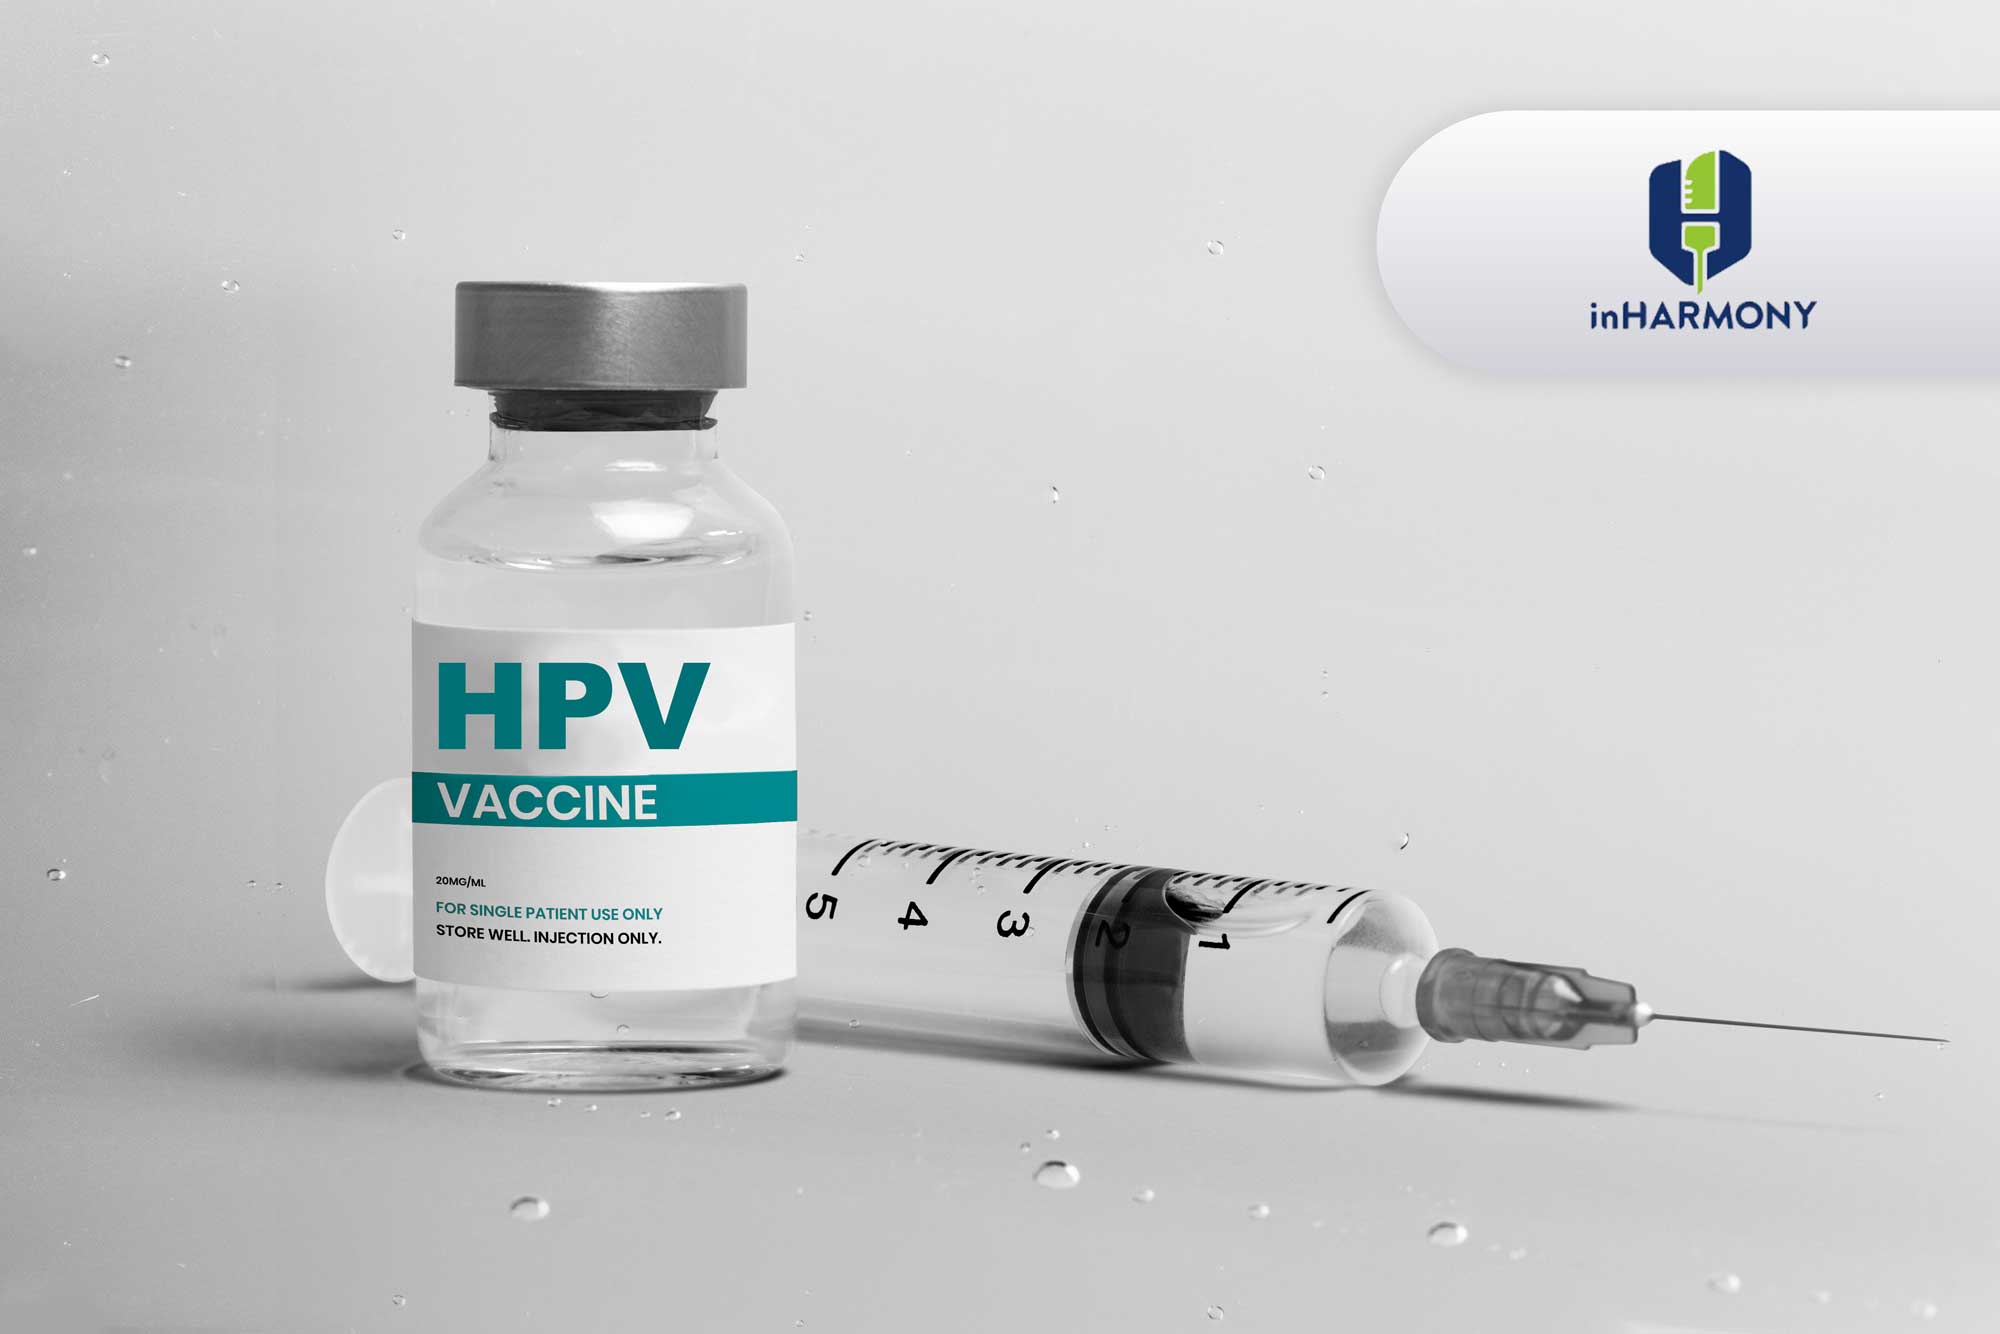 vaksin-hpv-inharmony_1691382134.jpg